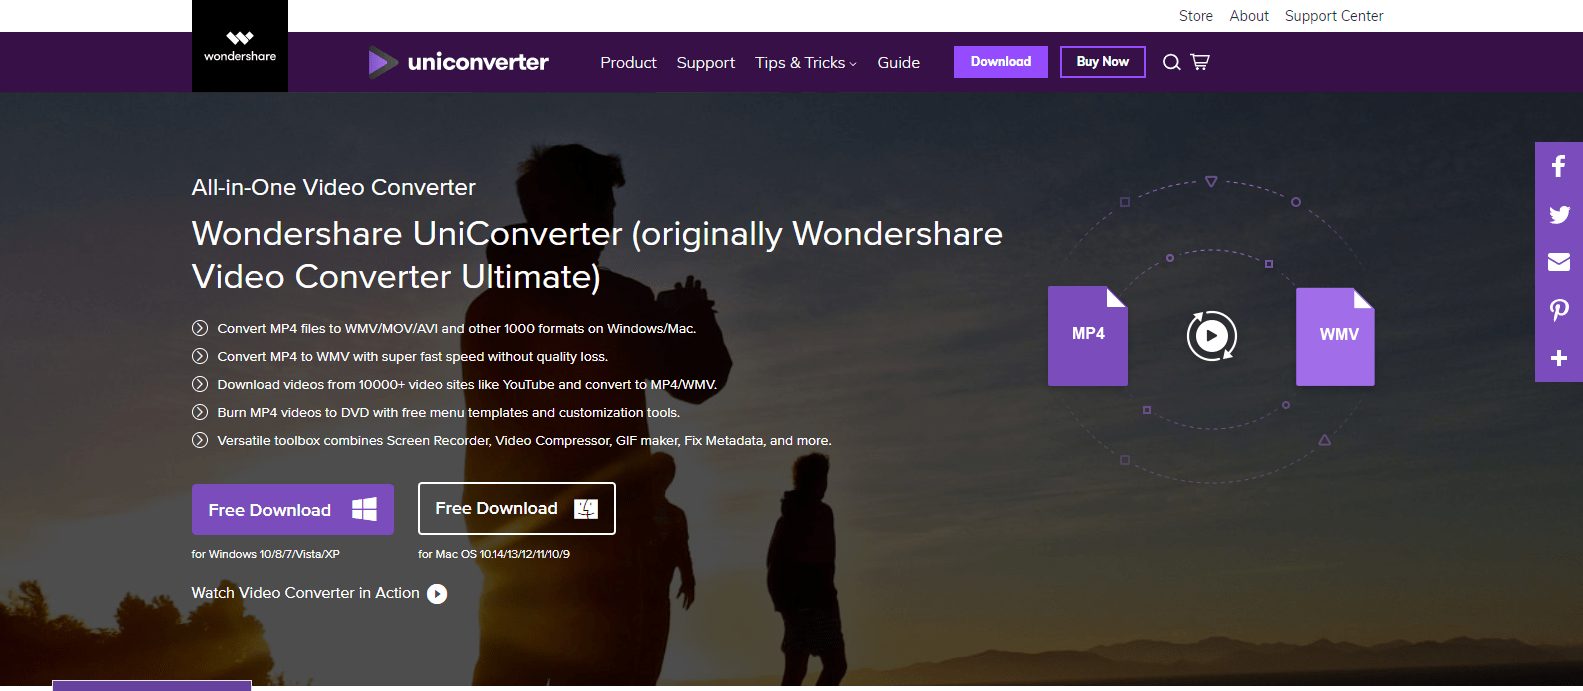 Wondershare video converter ultimate free